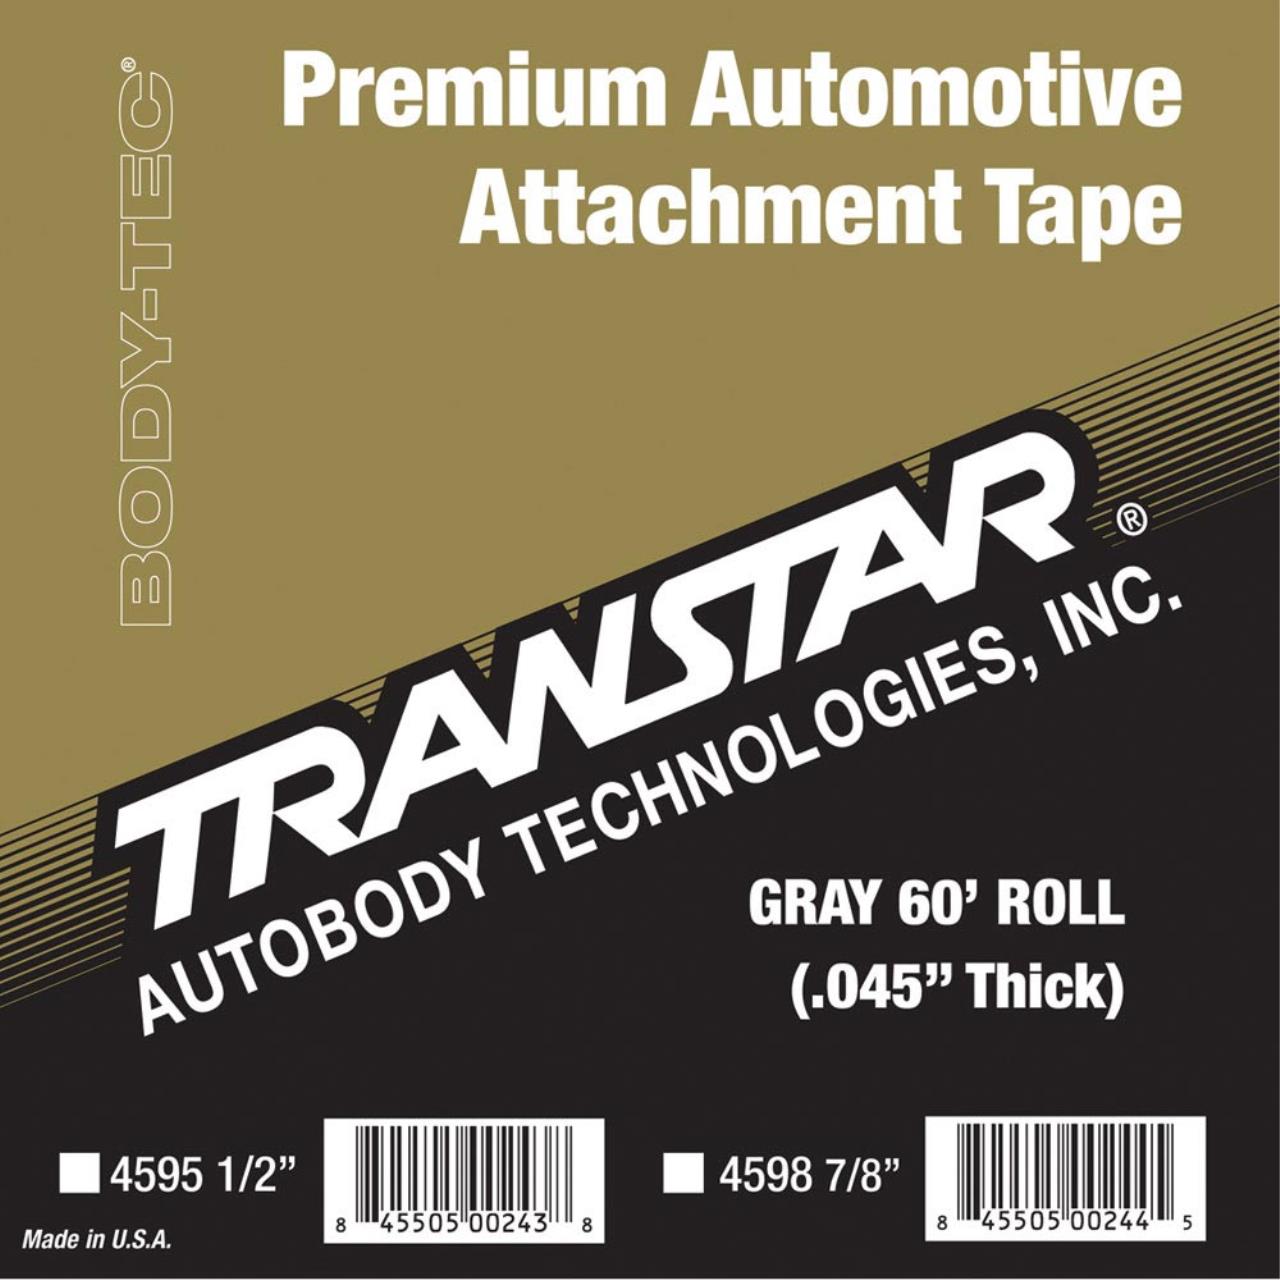 Transtar Premium Automotive Attachment Tape